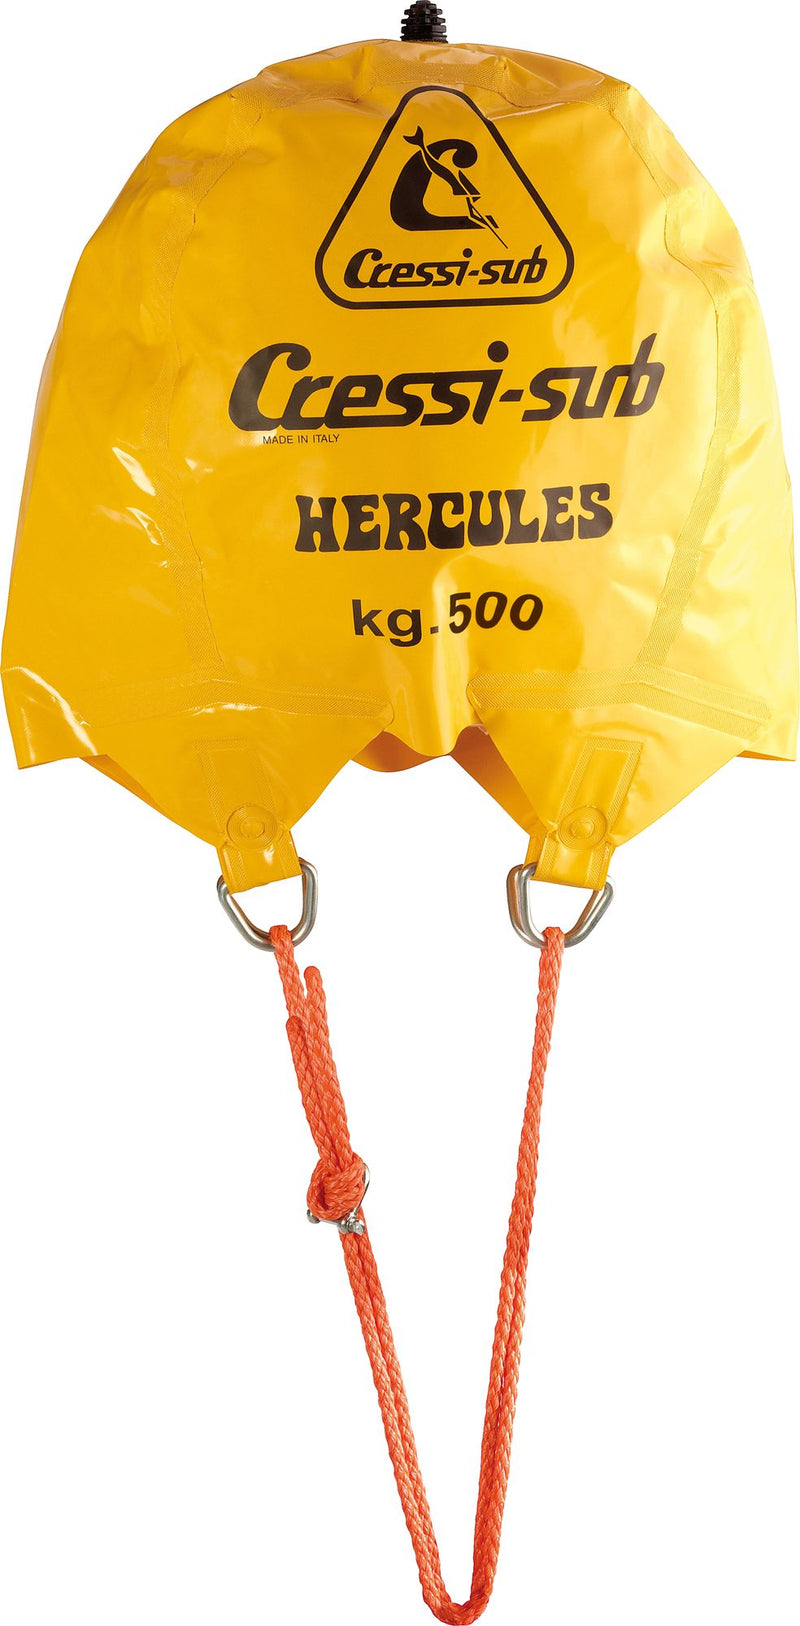 Hercules Lifting Balloon - Cressi